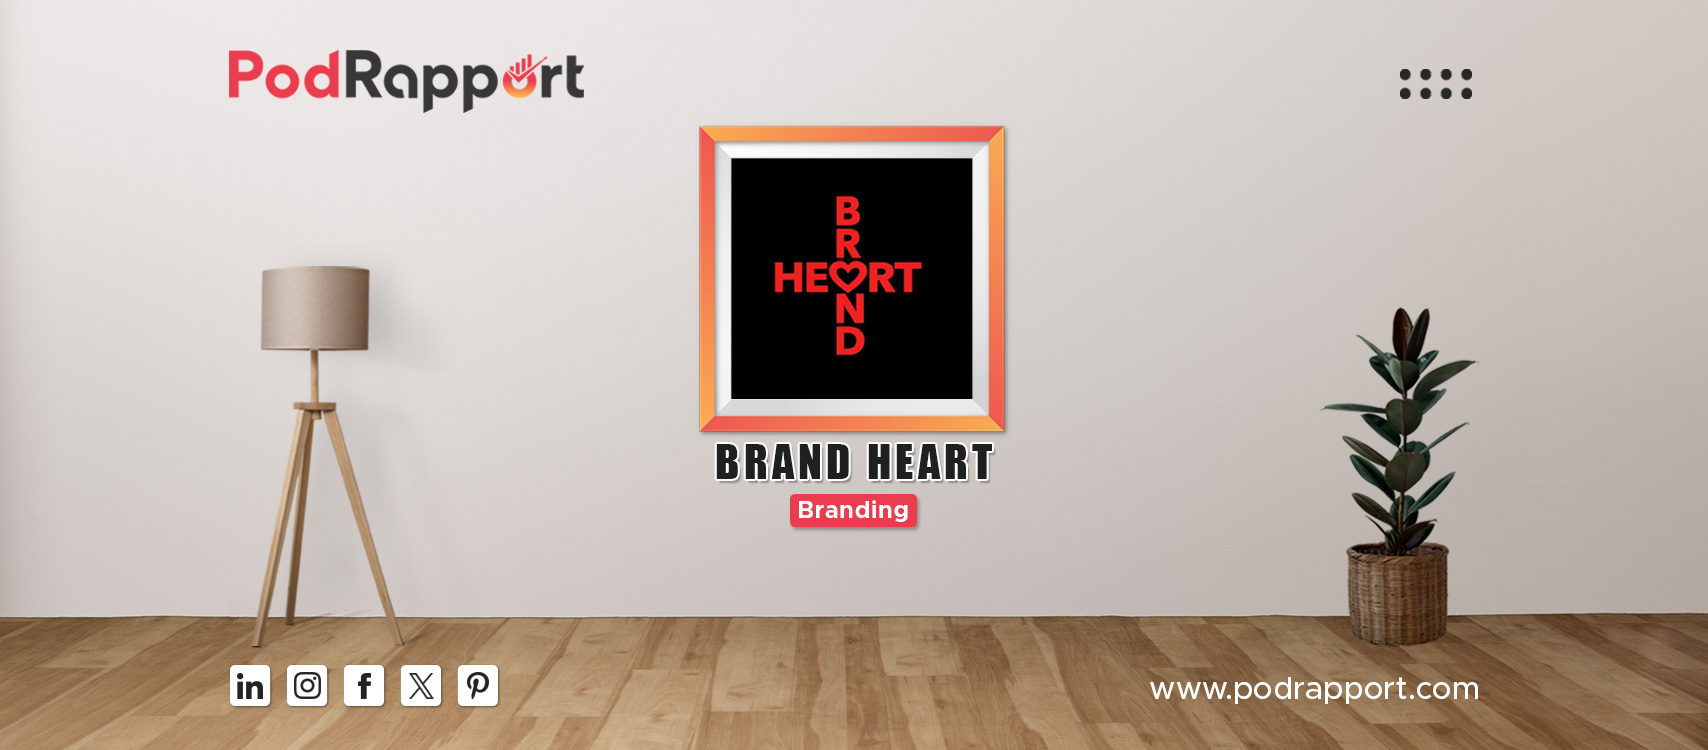 Brand Heart